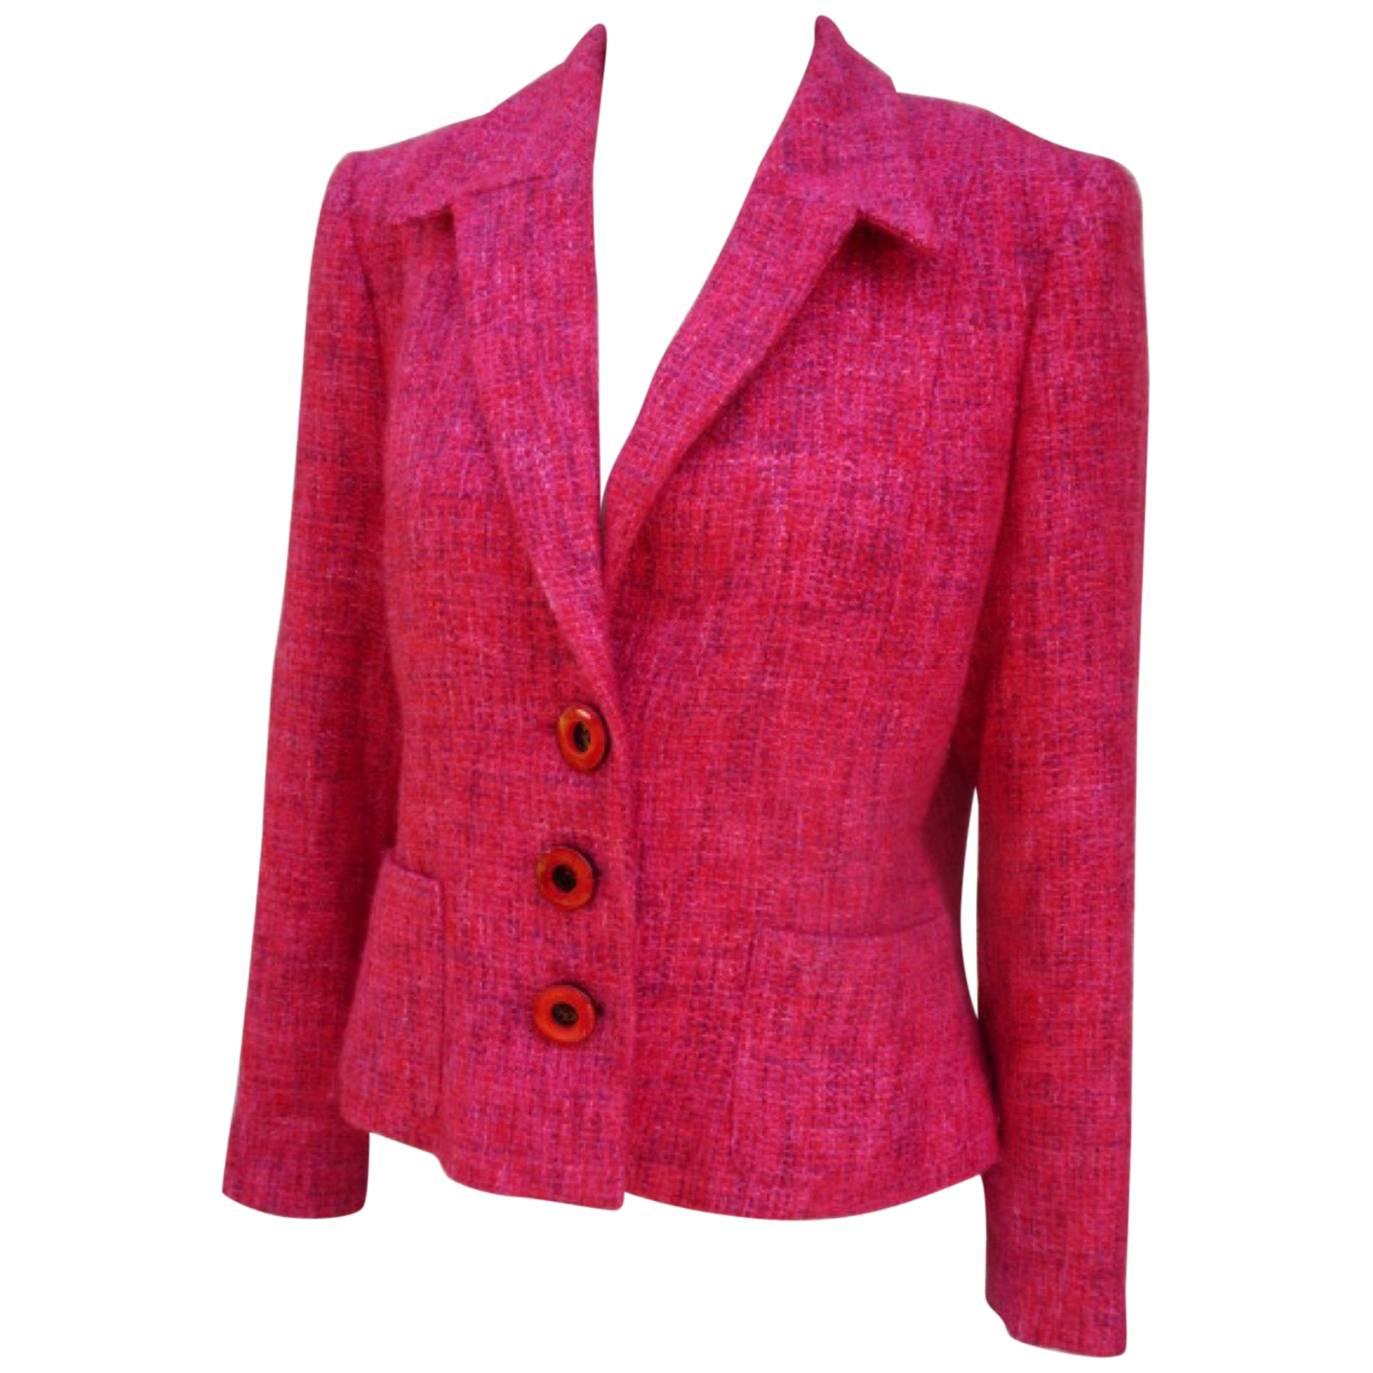 Pierre Balmain Paris red rose light wool jacket For Sale